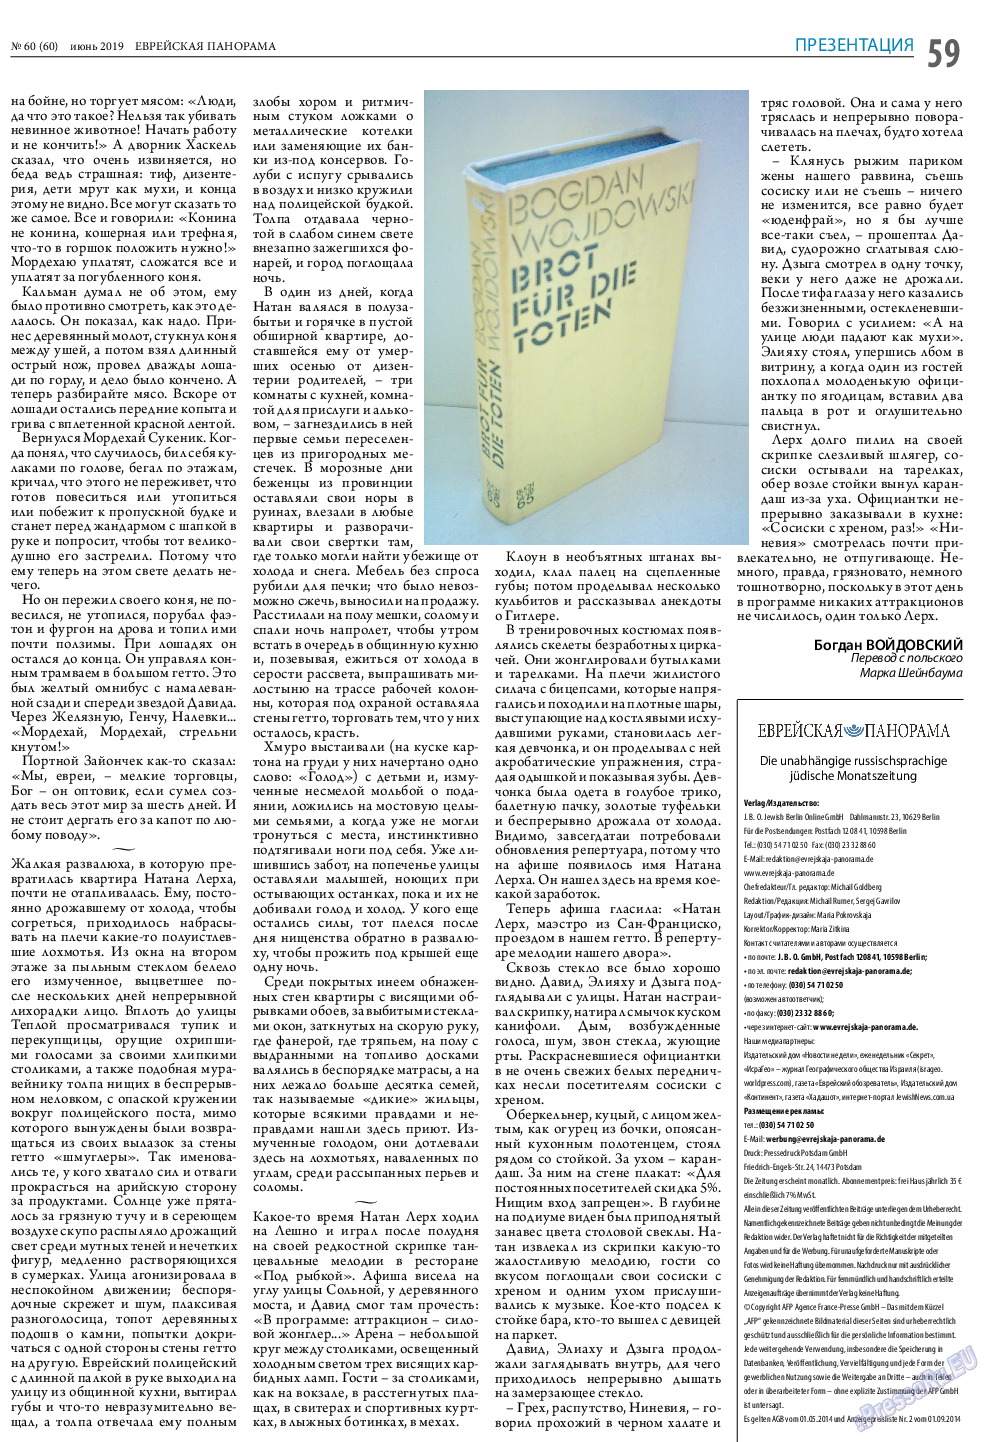 Еврейская панорама, газета. 2019 №6 стр.59